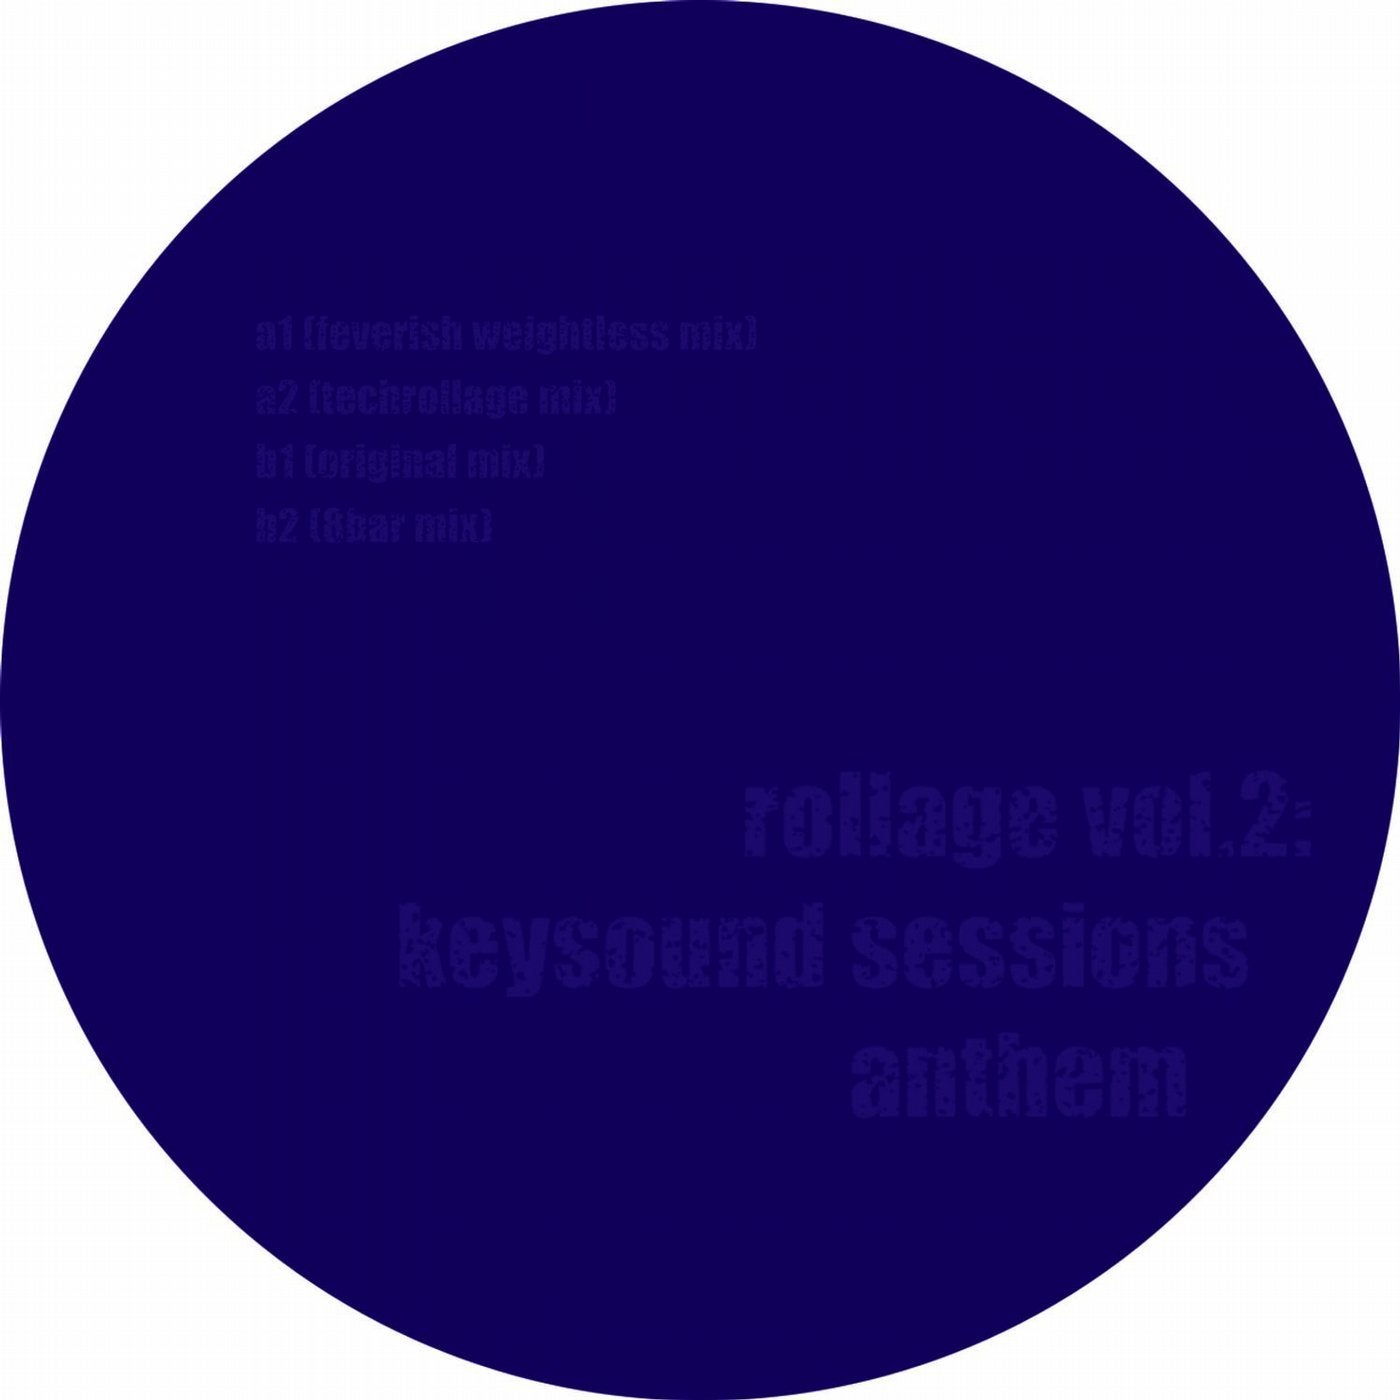 Rollage vol.2: Keysound Sessions Anthem